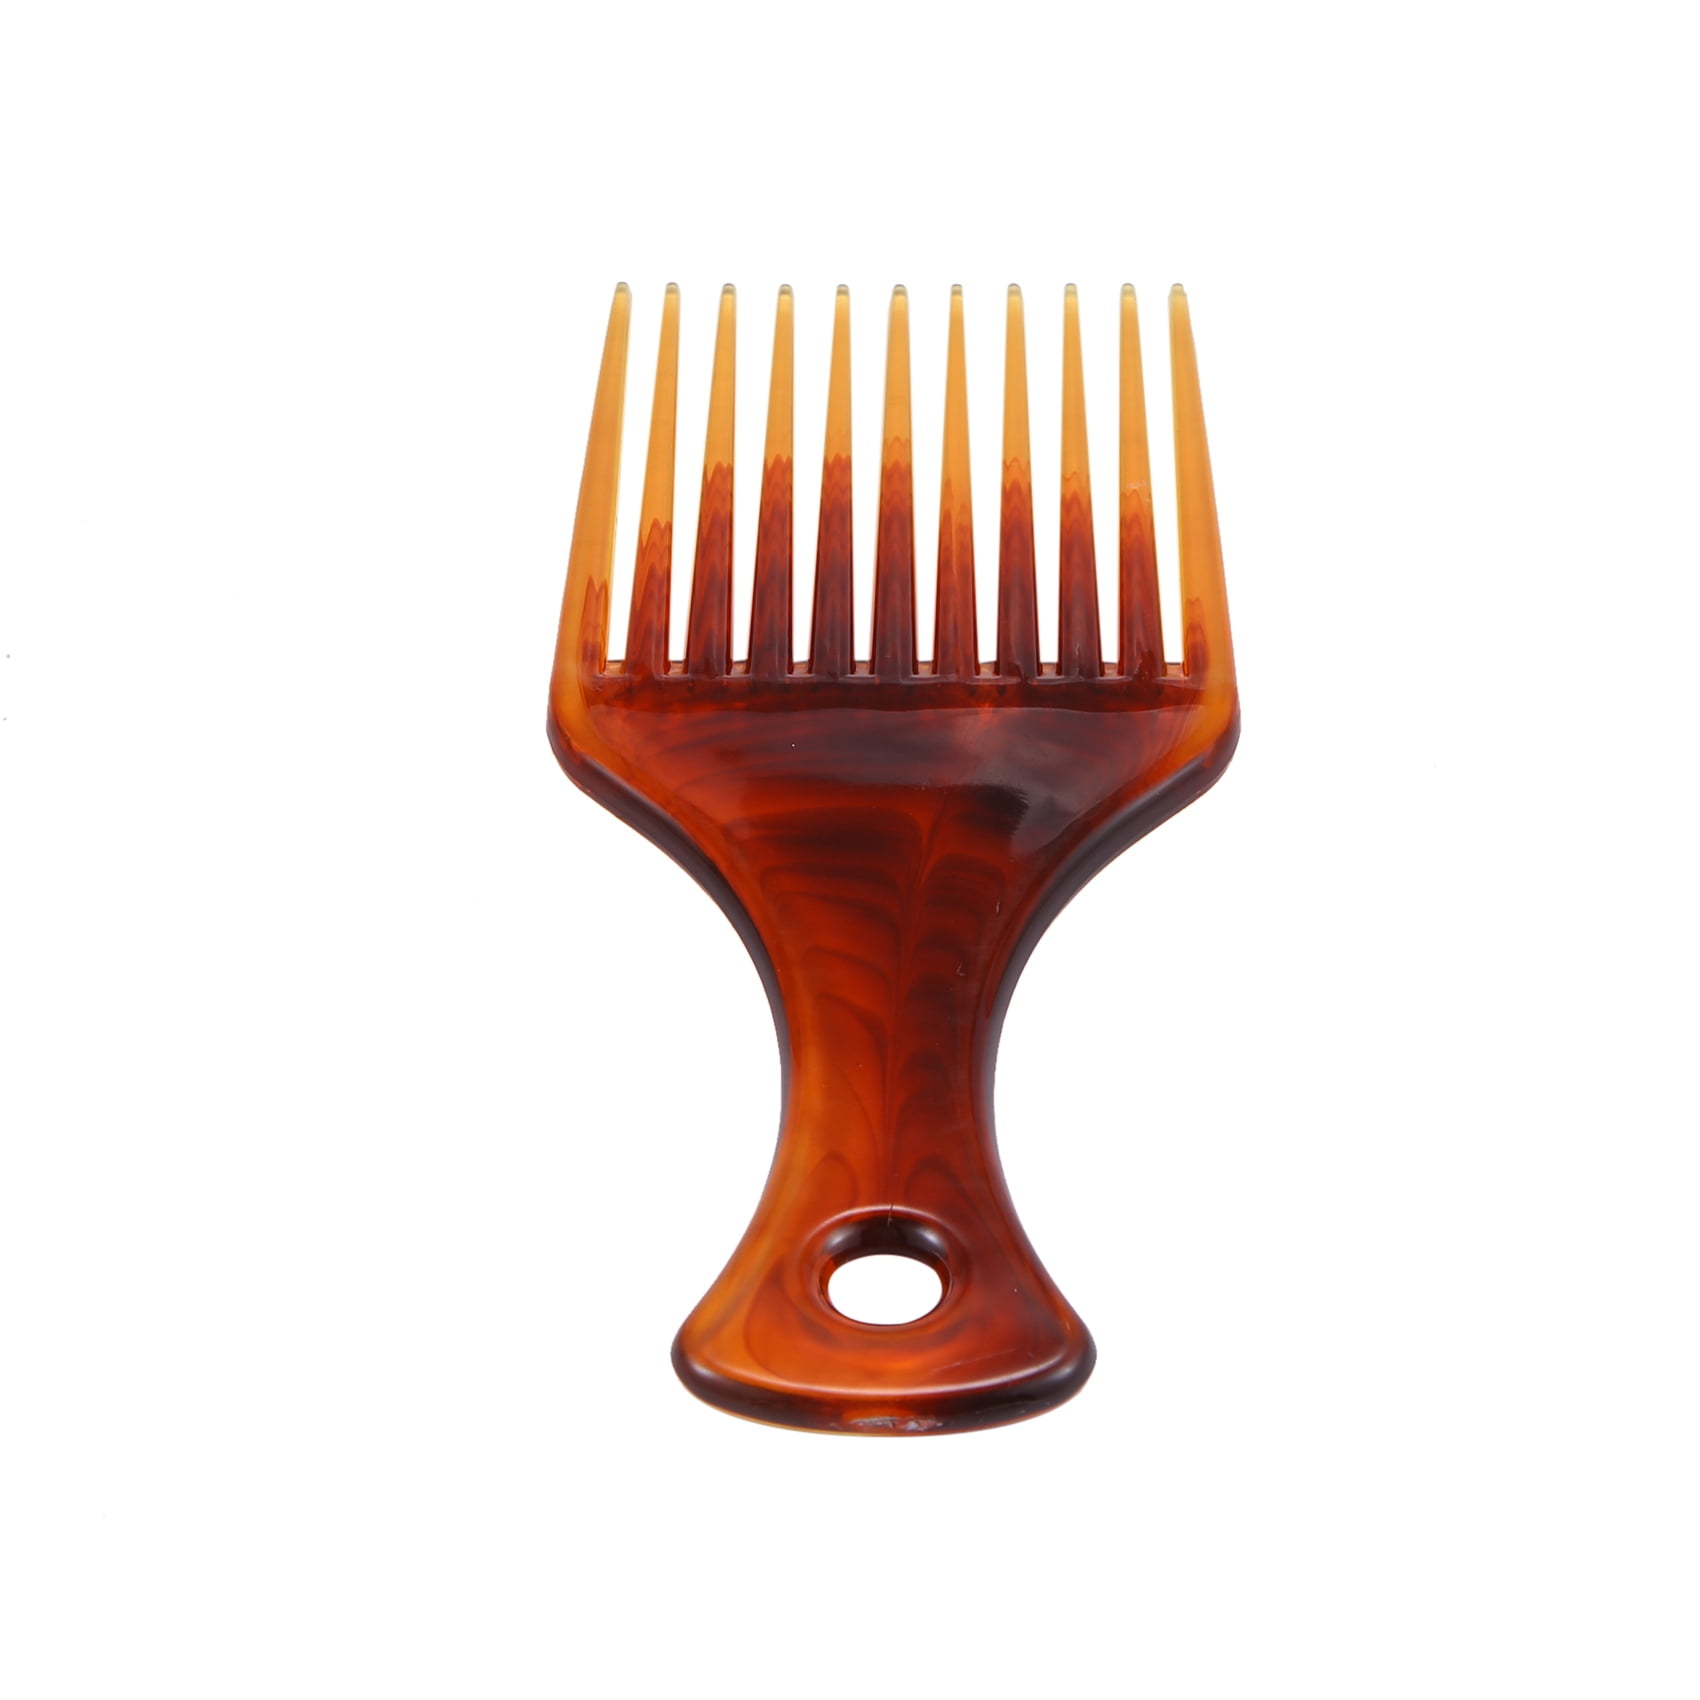 Hair Comb Hair Fork Comb Insert Hairdressing Curly Hair Brush Comb Hairbrush